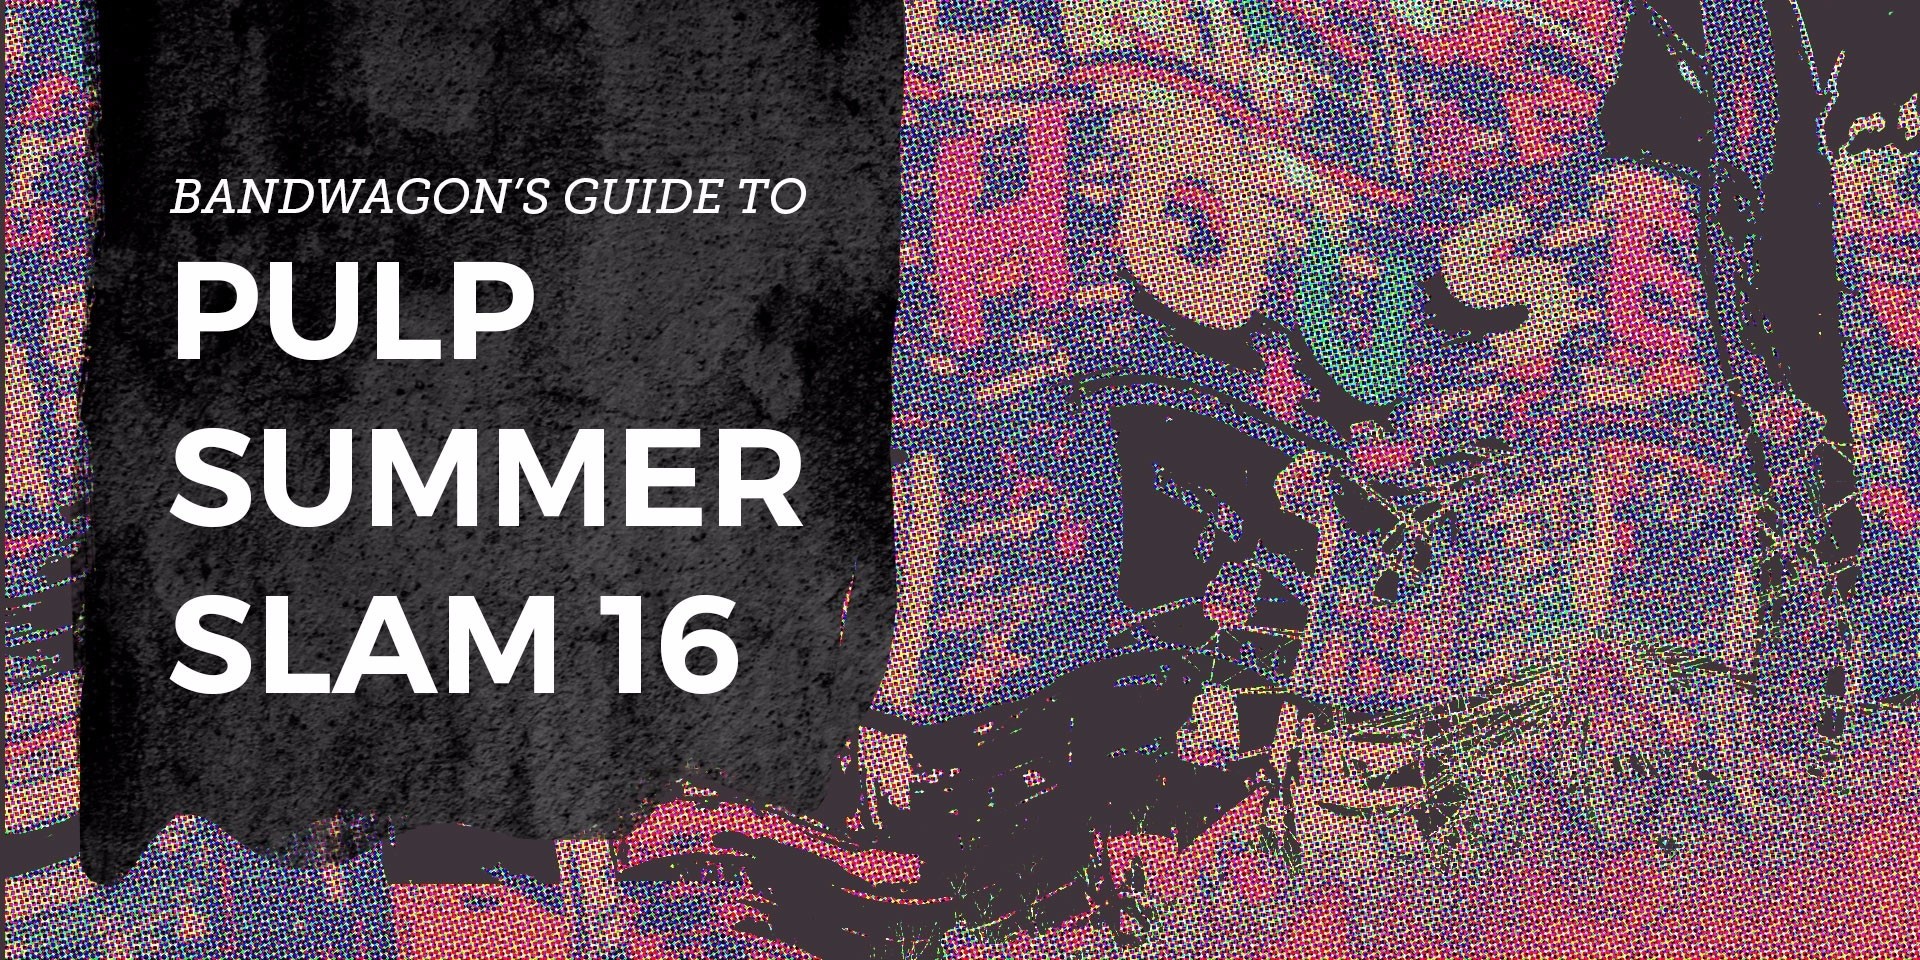 Bandwagon's Guide to Pulp Summer Slam 16